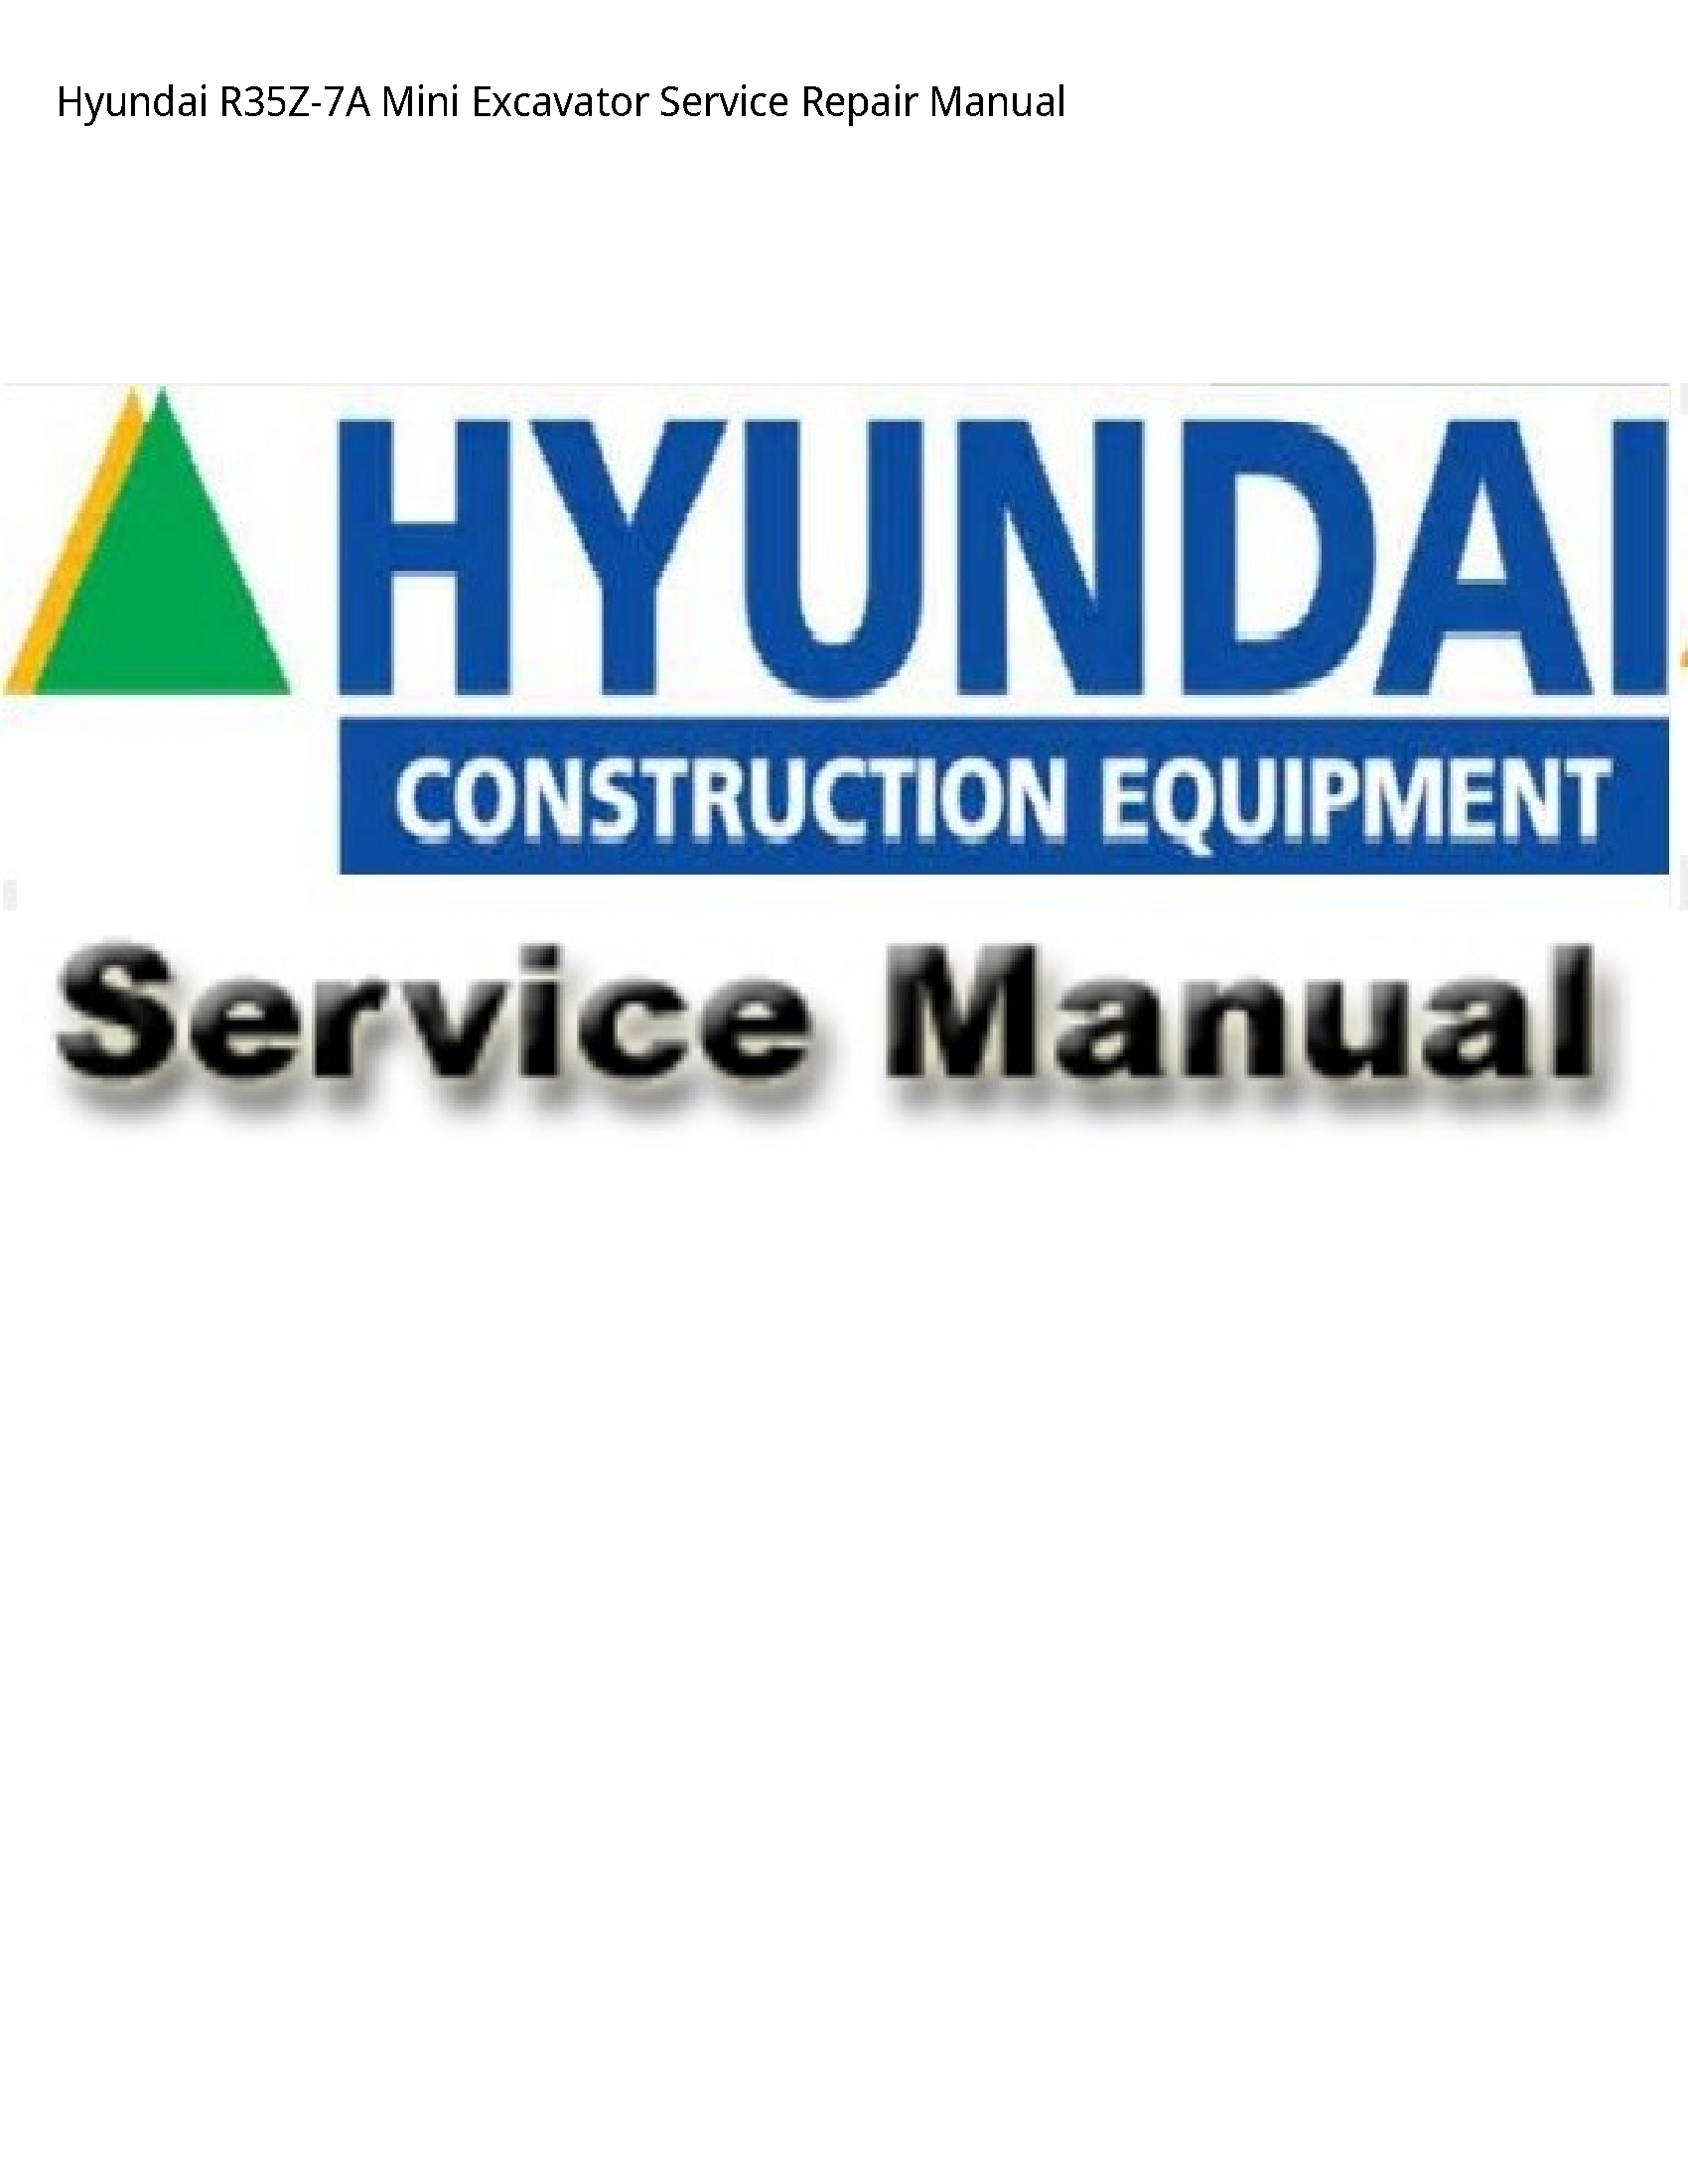 Hyundai R35Z-7A Mini Excavator manual